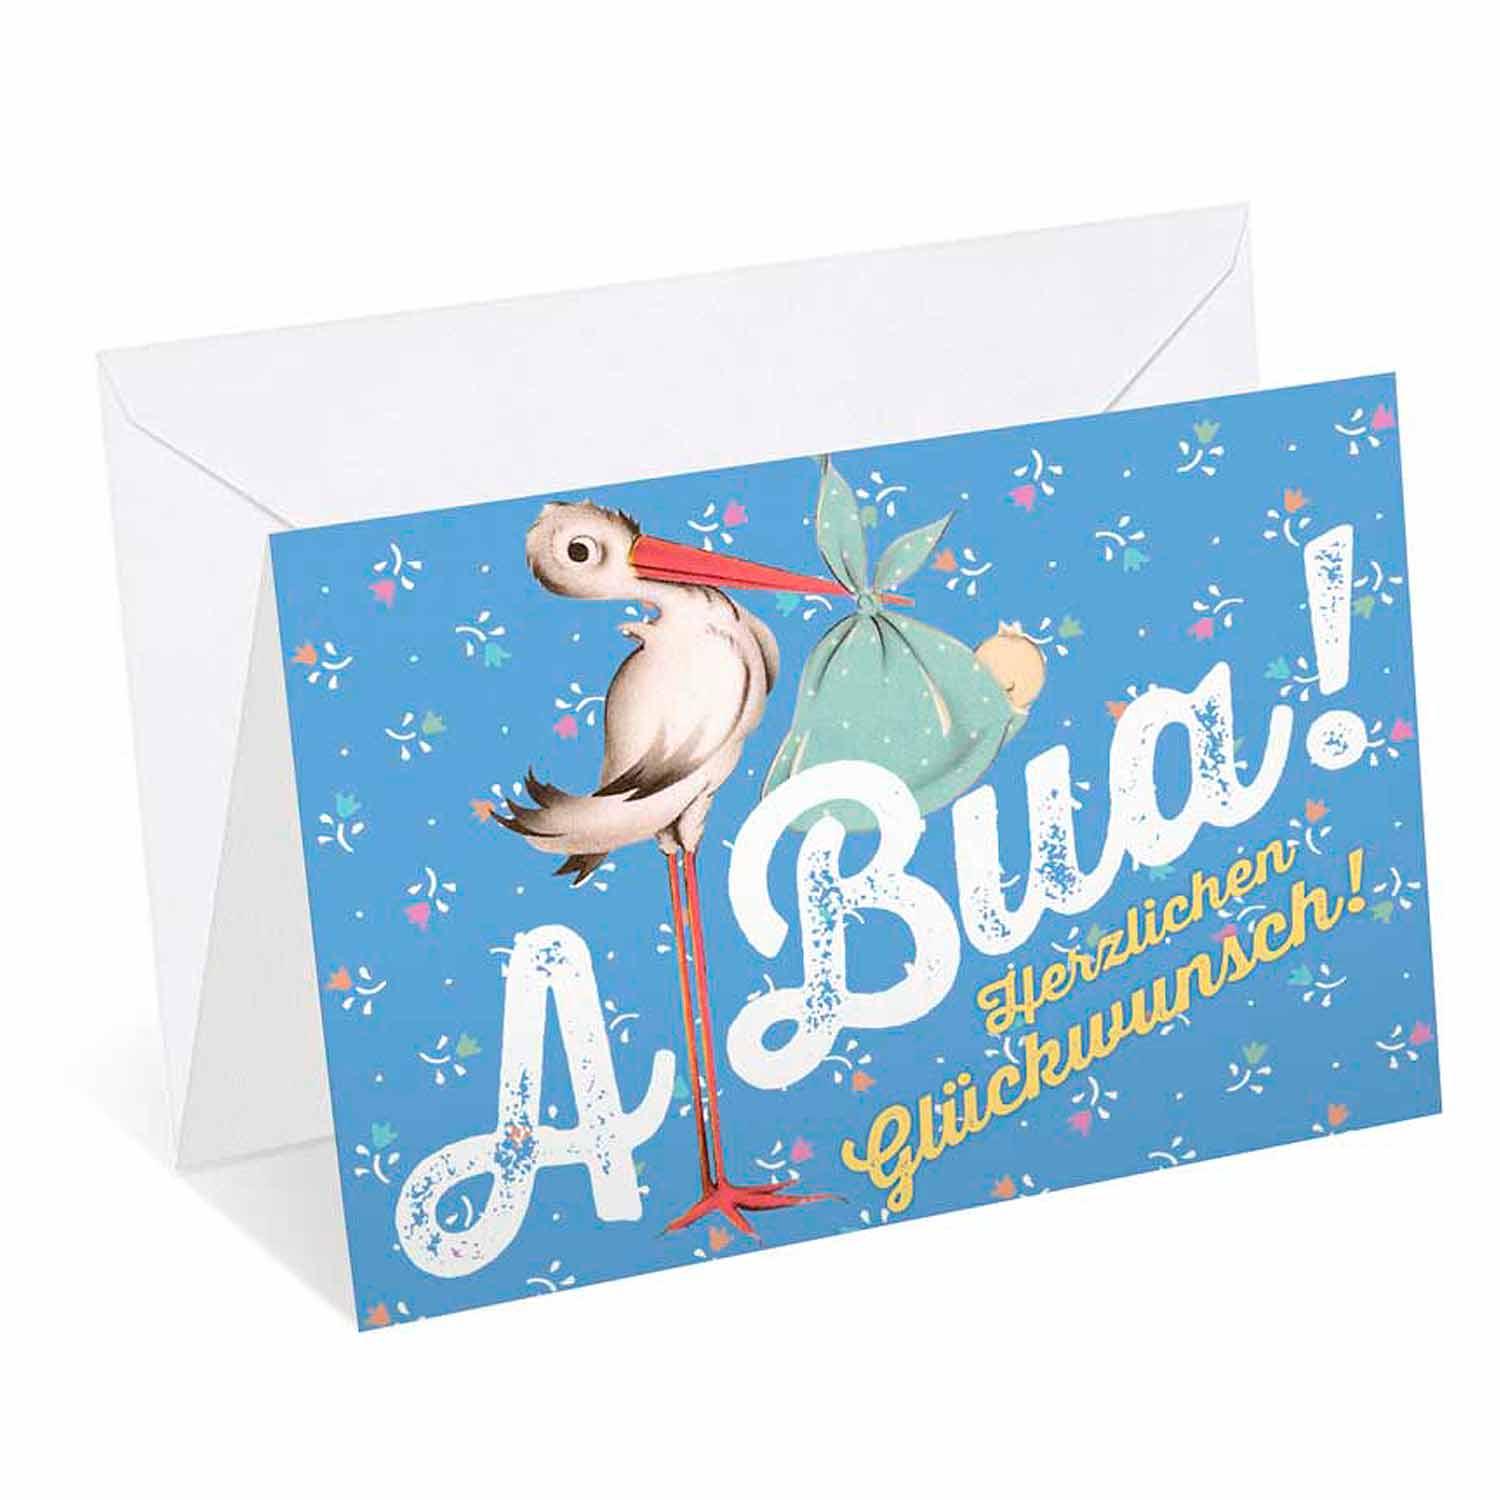 Glückwunschkarte "A Bua!" - bavariashop - mei LebensGfui